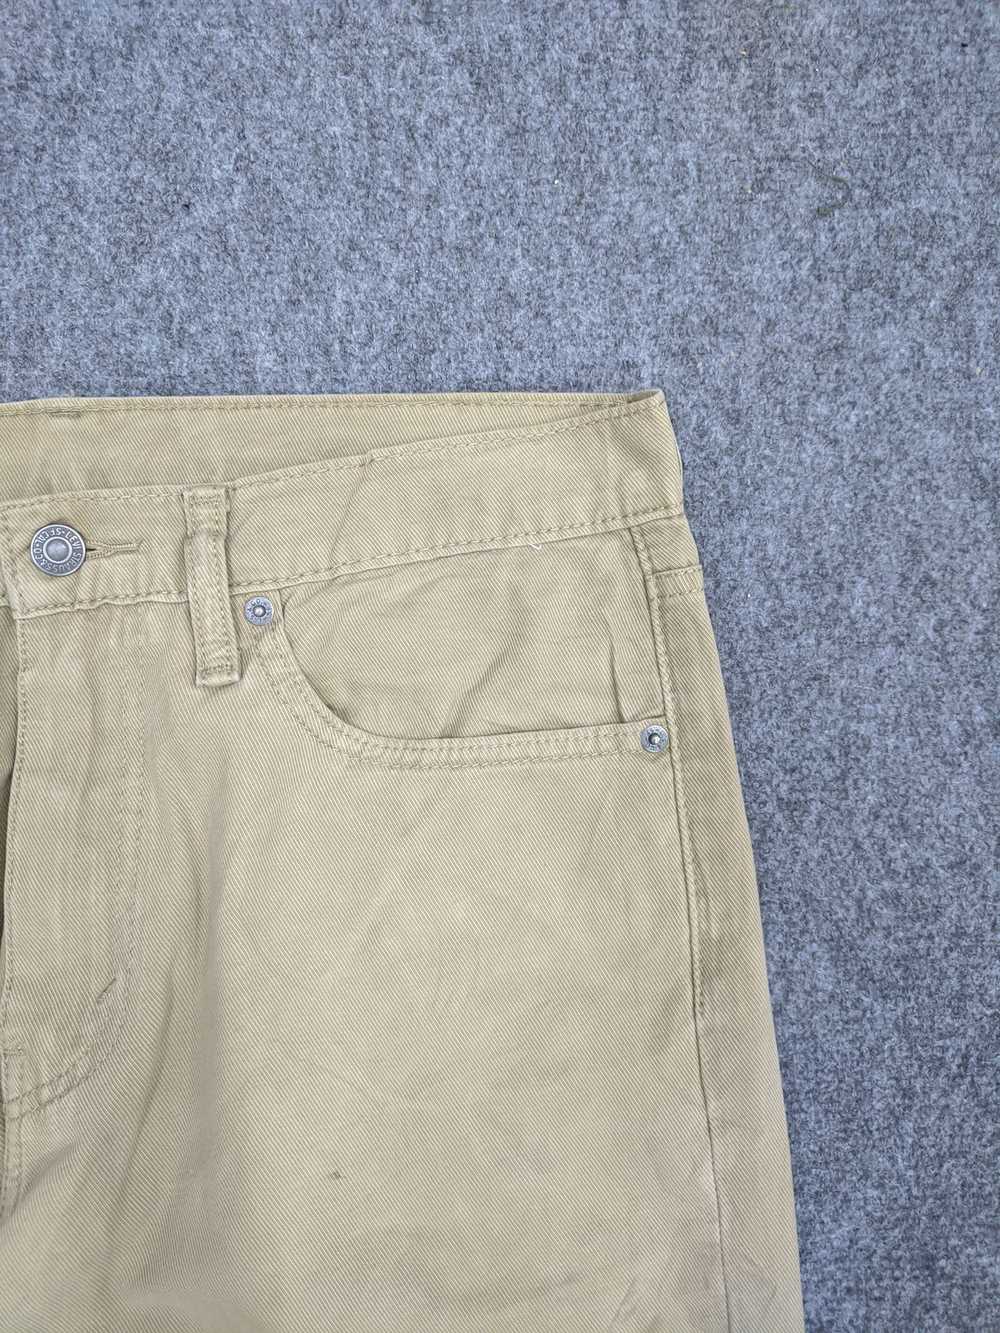 Levi's × Vintage Vintage Levis 512 White Tab Jeans - image 9